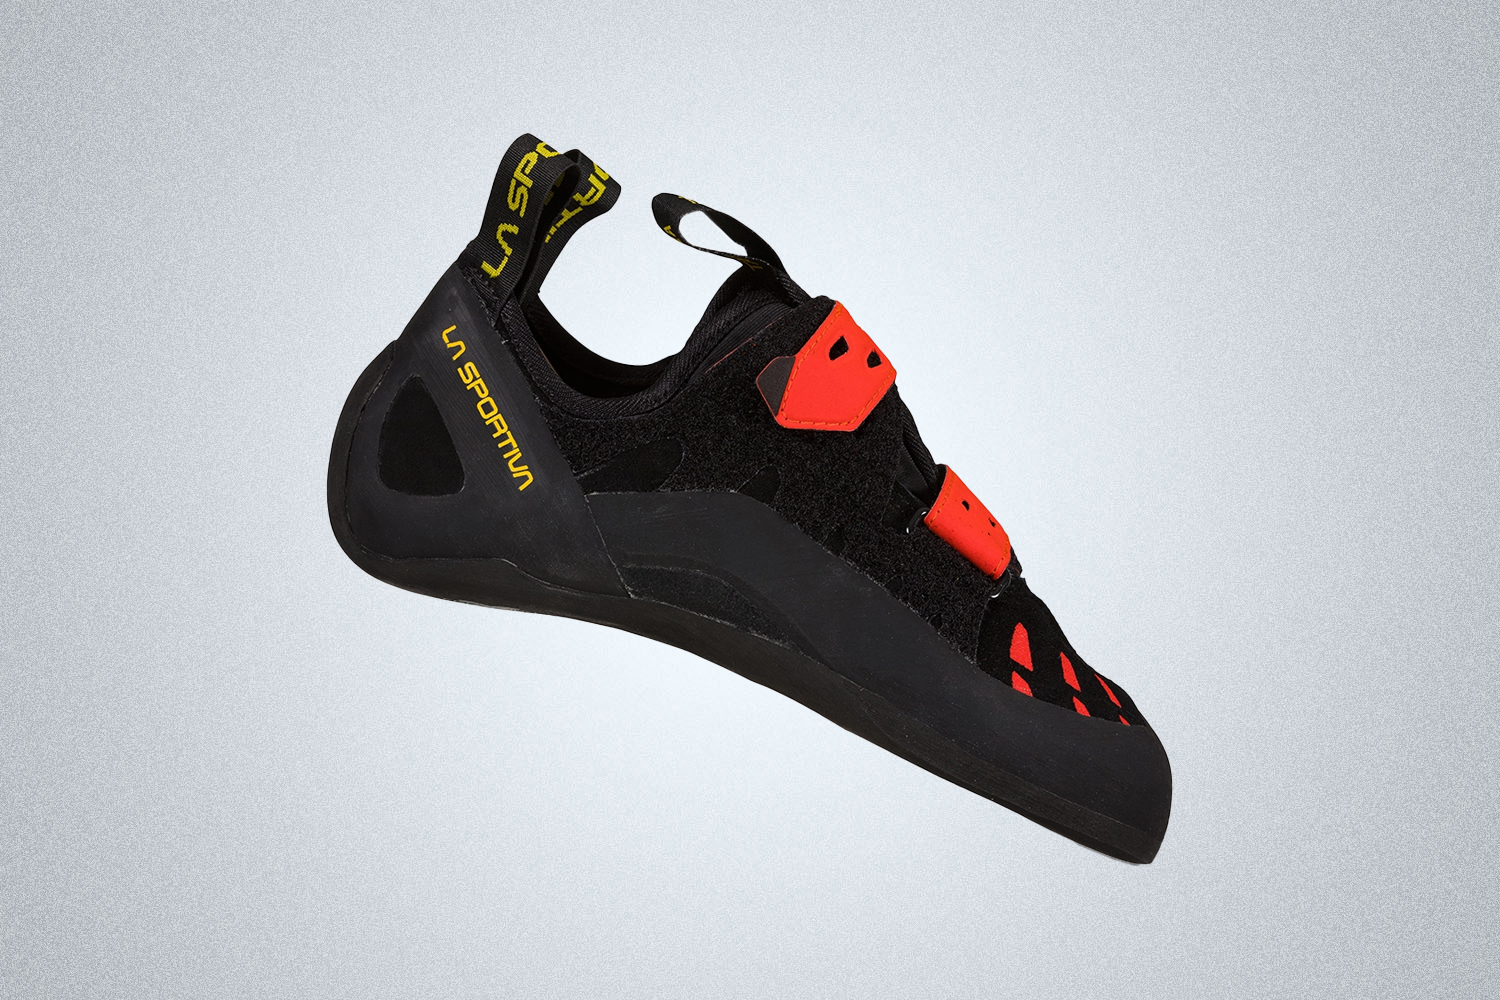 The La Sportiva Tarantula is the best climbing shoe for beginners in 2022